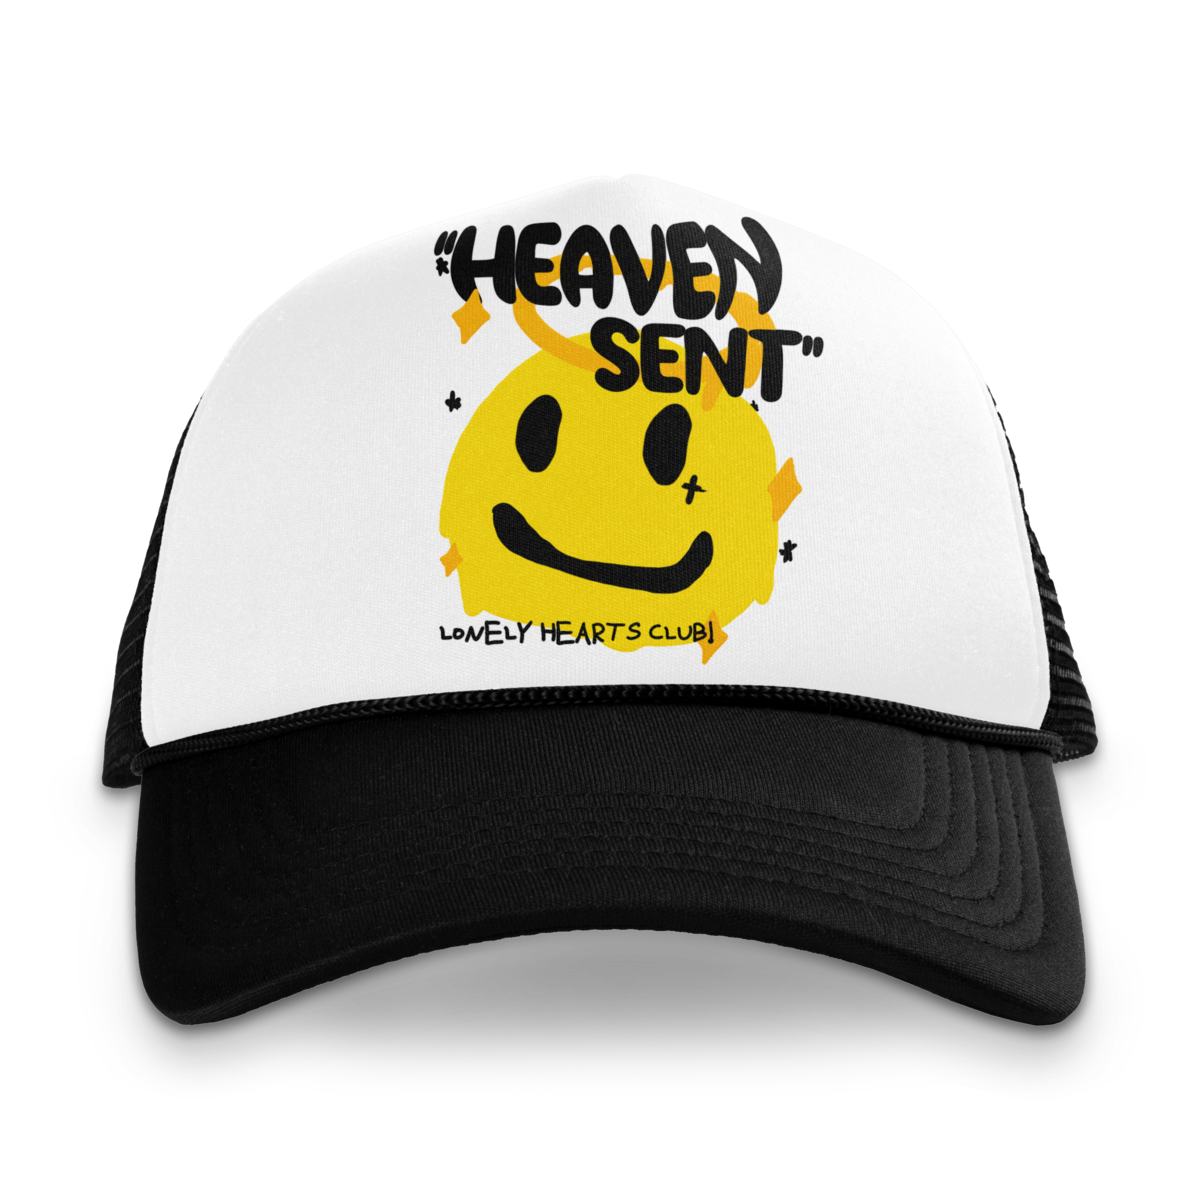 Lonely Hearts Club "Heaven Sent" Trucker Hat